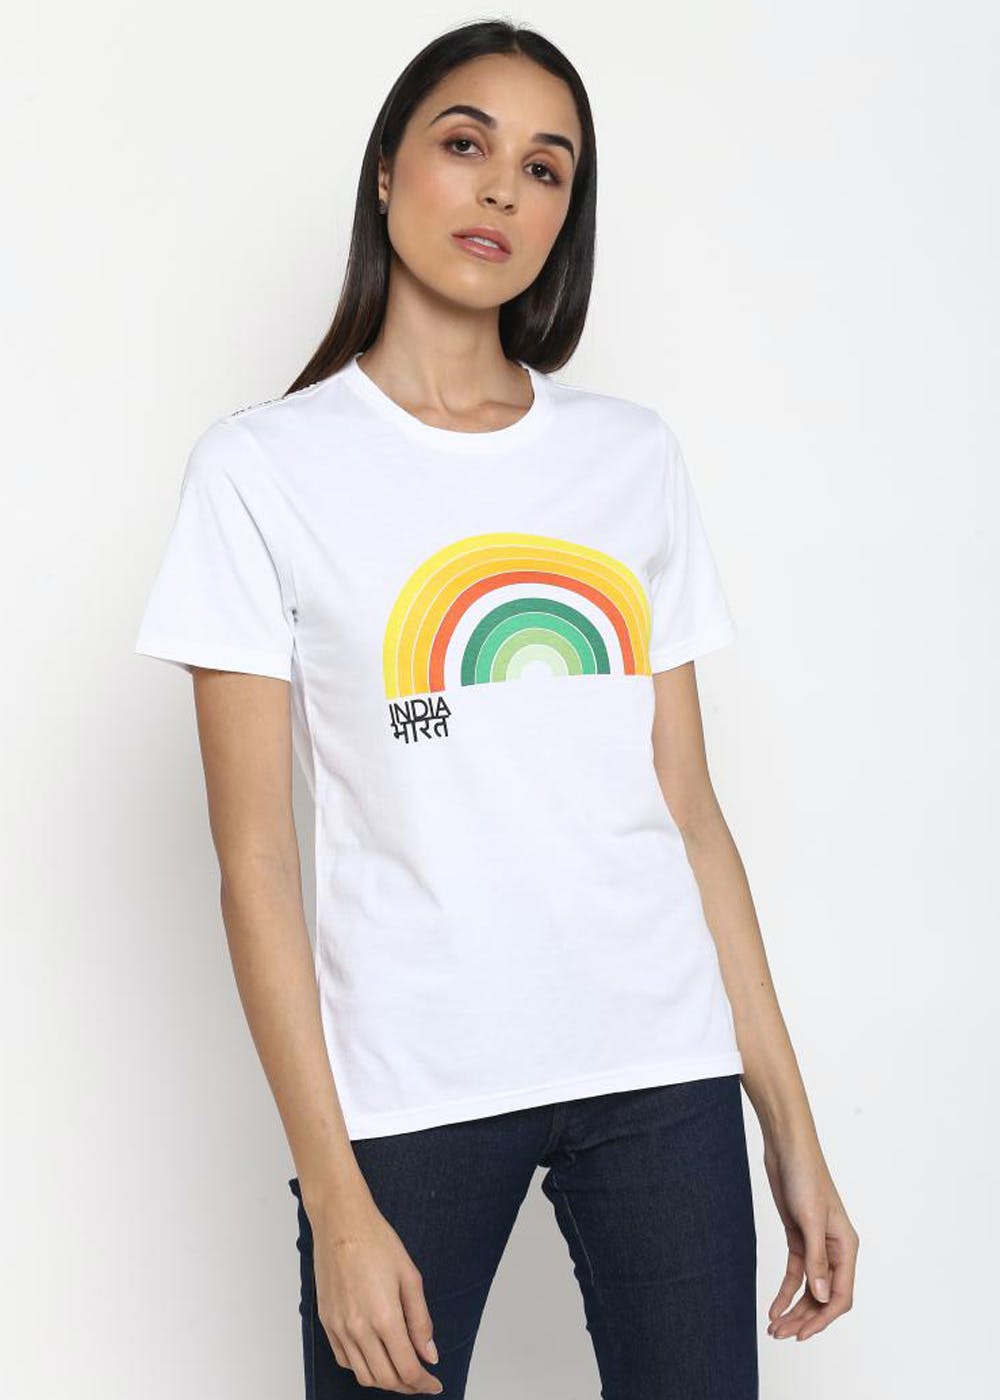 Get Bharat-India Graphic Rainbow T-shirt at ₹ 900 | LBB Shop